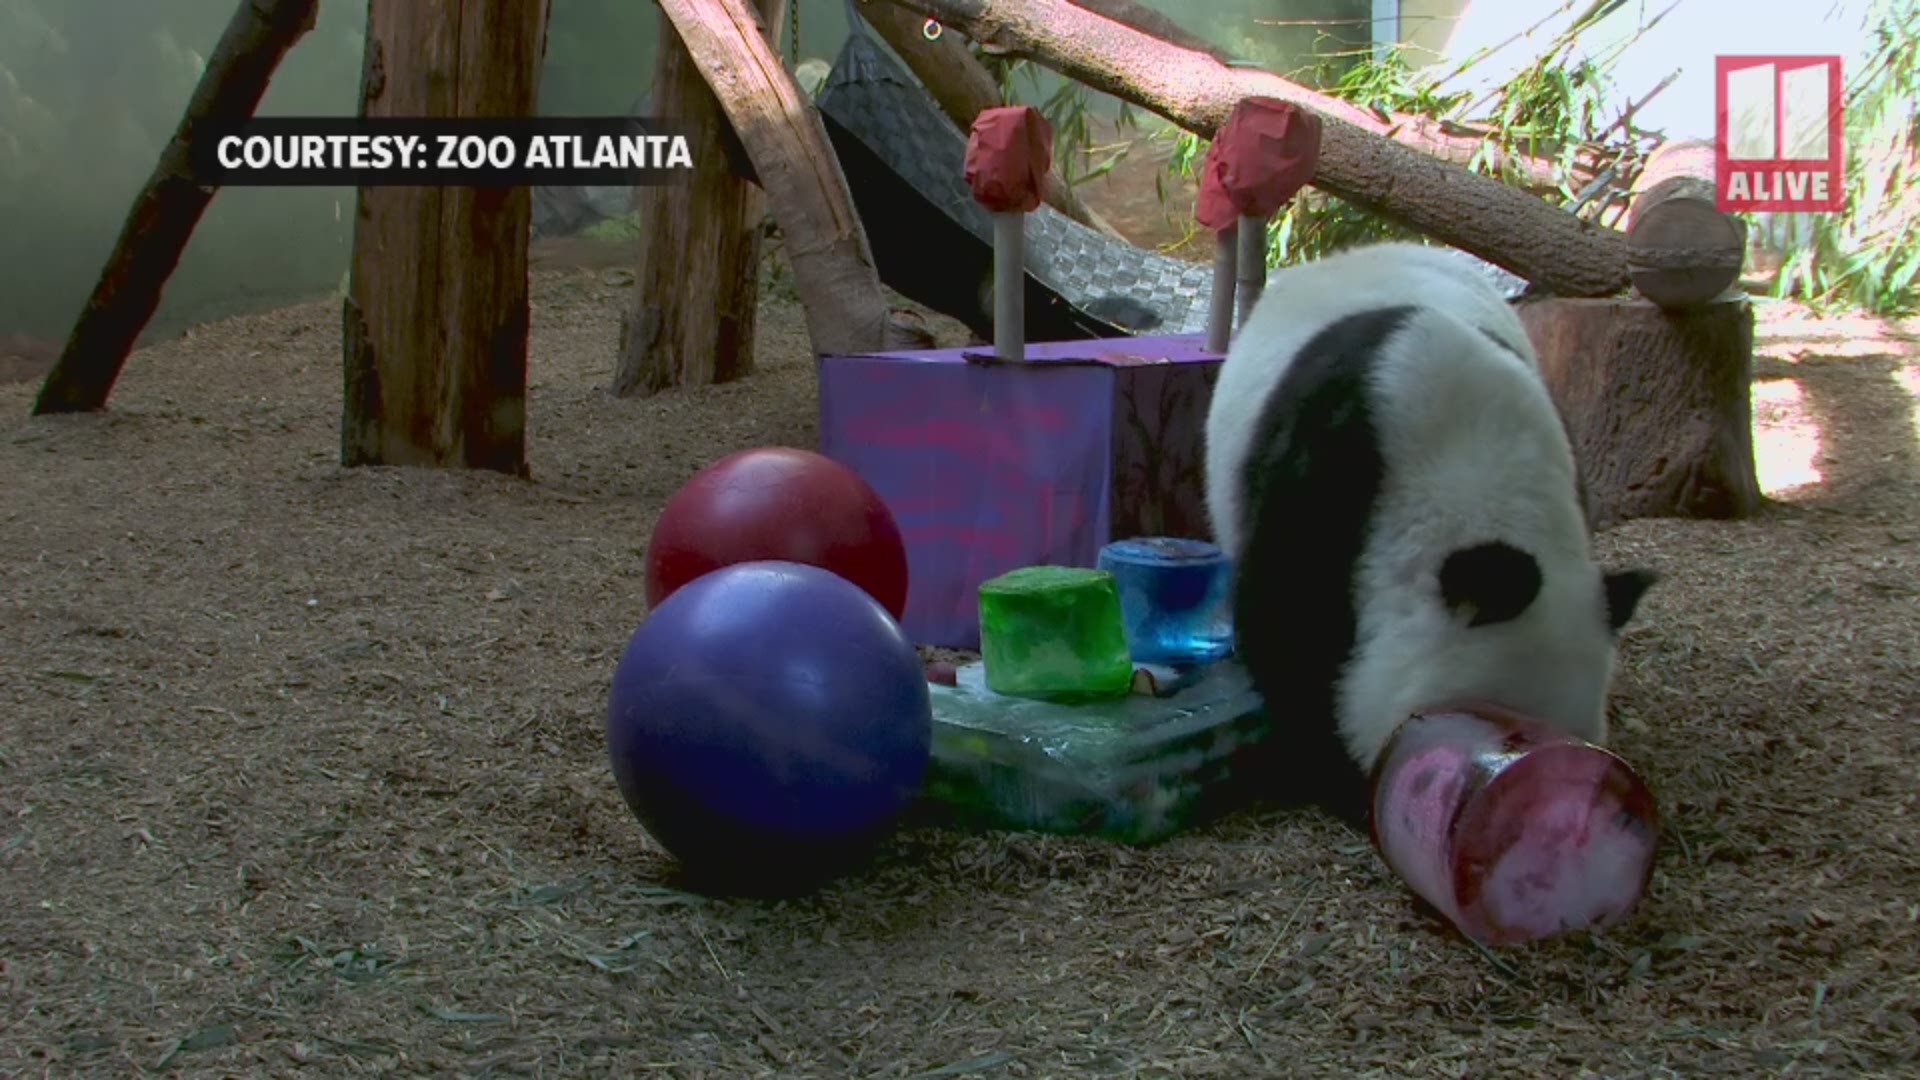 Giant panda twins Ya Lun and Xi Lun turned 3 on Sept. 3.